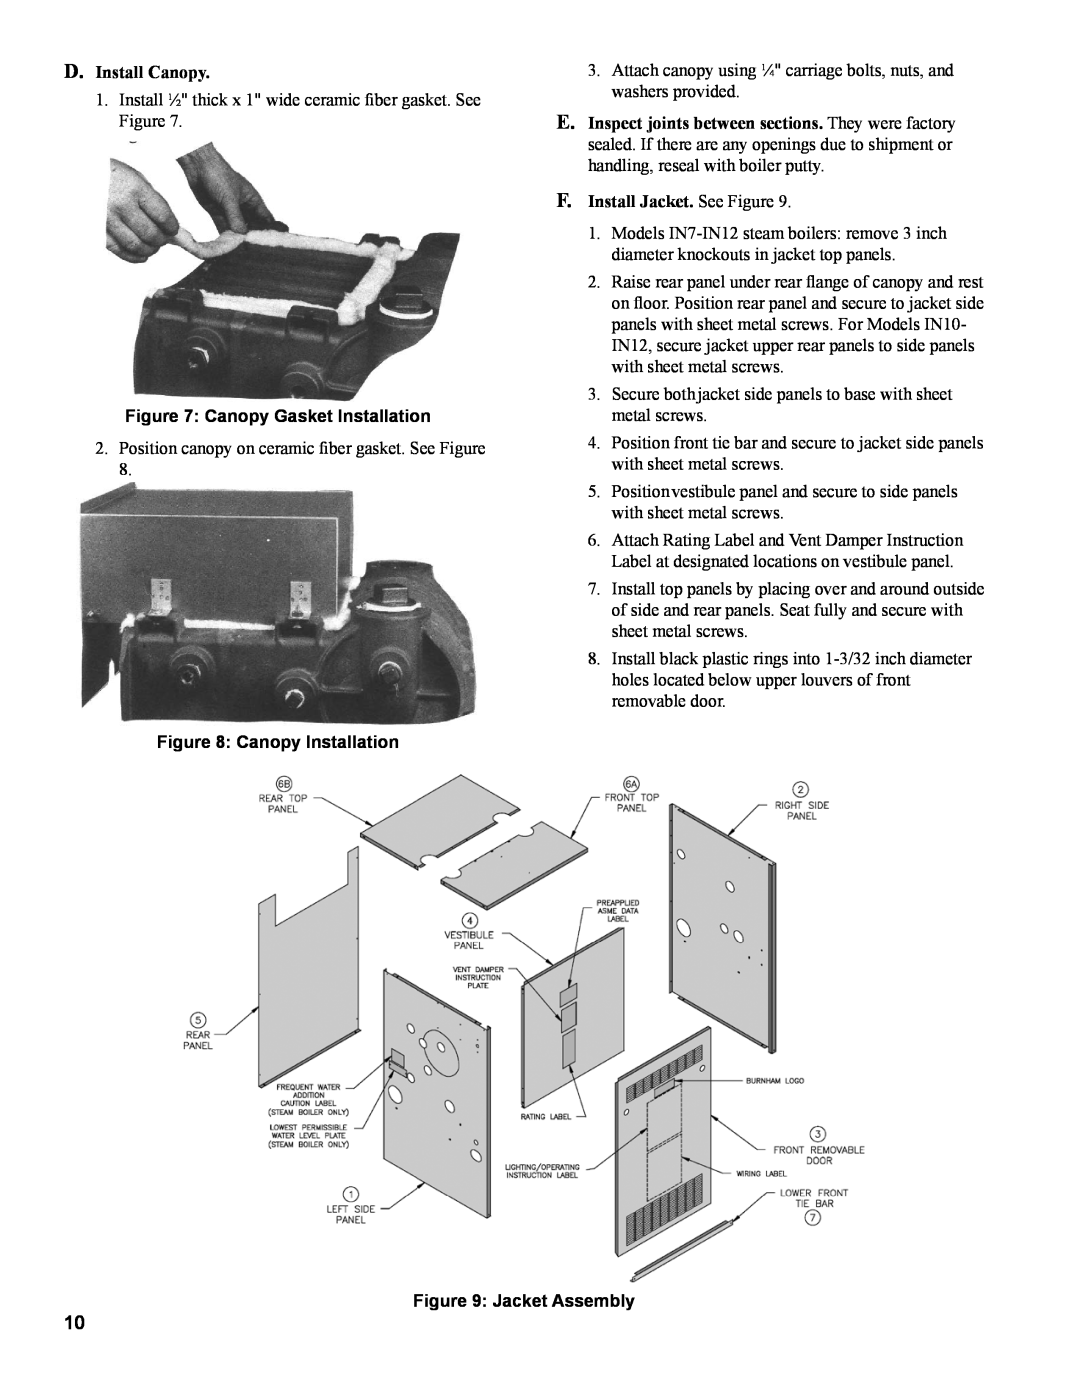 Burnham IN10 manual D. Install Canopy, Canopy Gasket Installation, Canopy Installation, F. Install Jacket. See Figure 